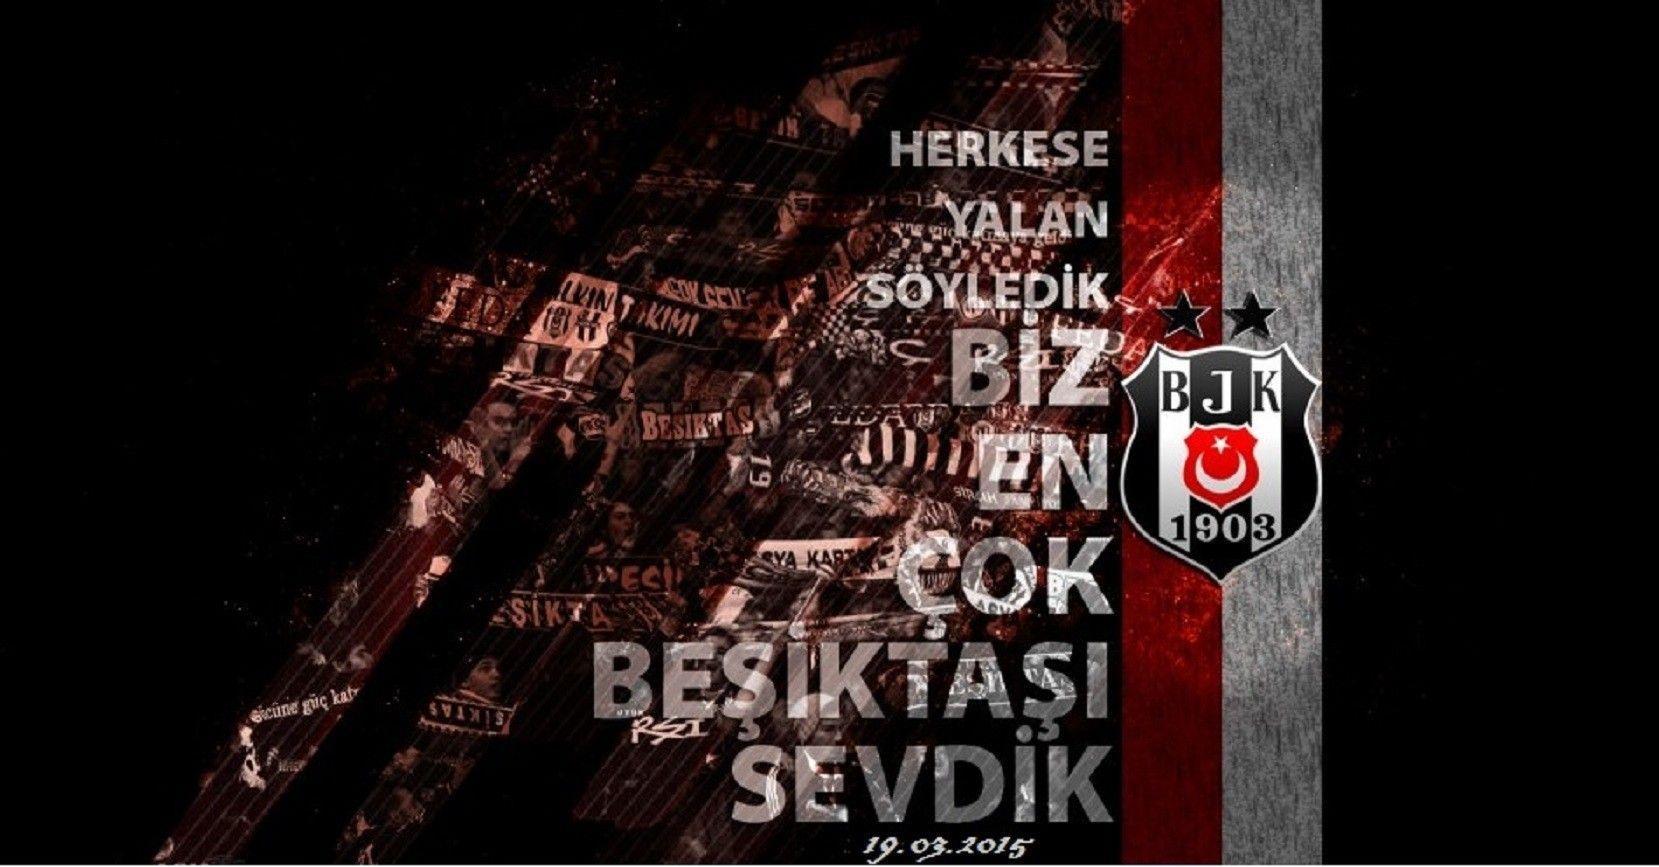 Besiktas J.K., Soccer Clubs, Mustafa Kemal Atatürk, Muslim